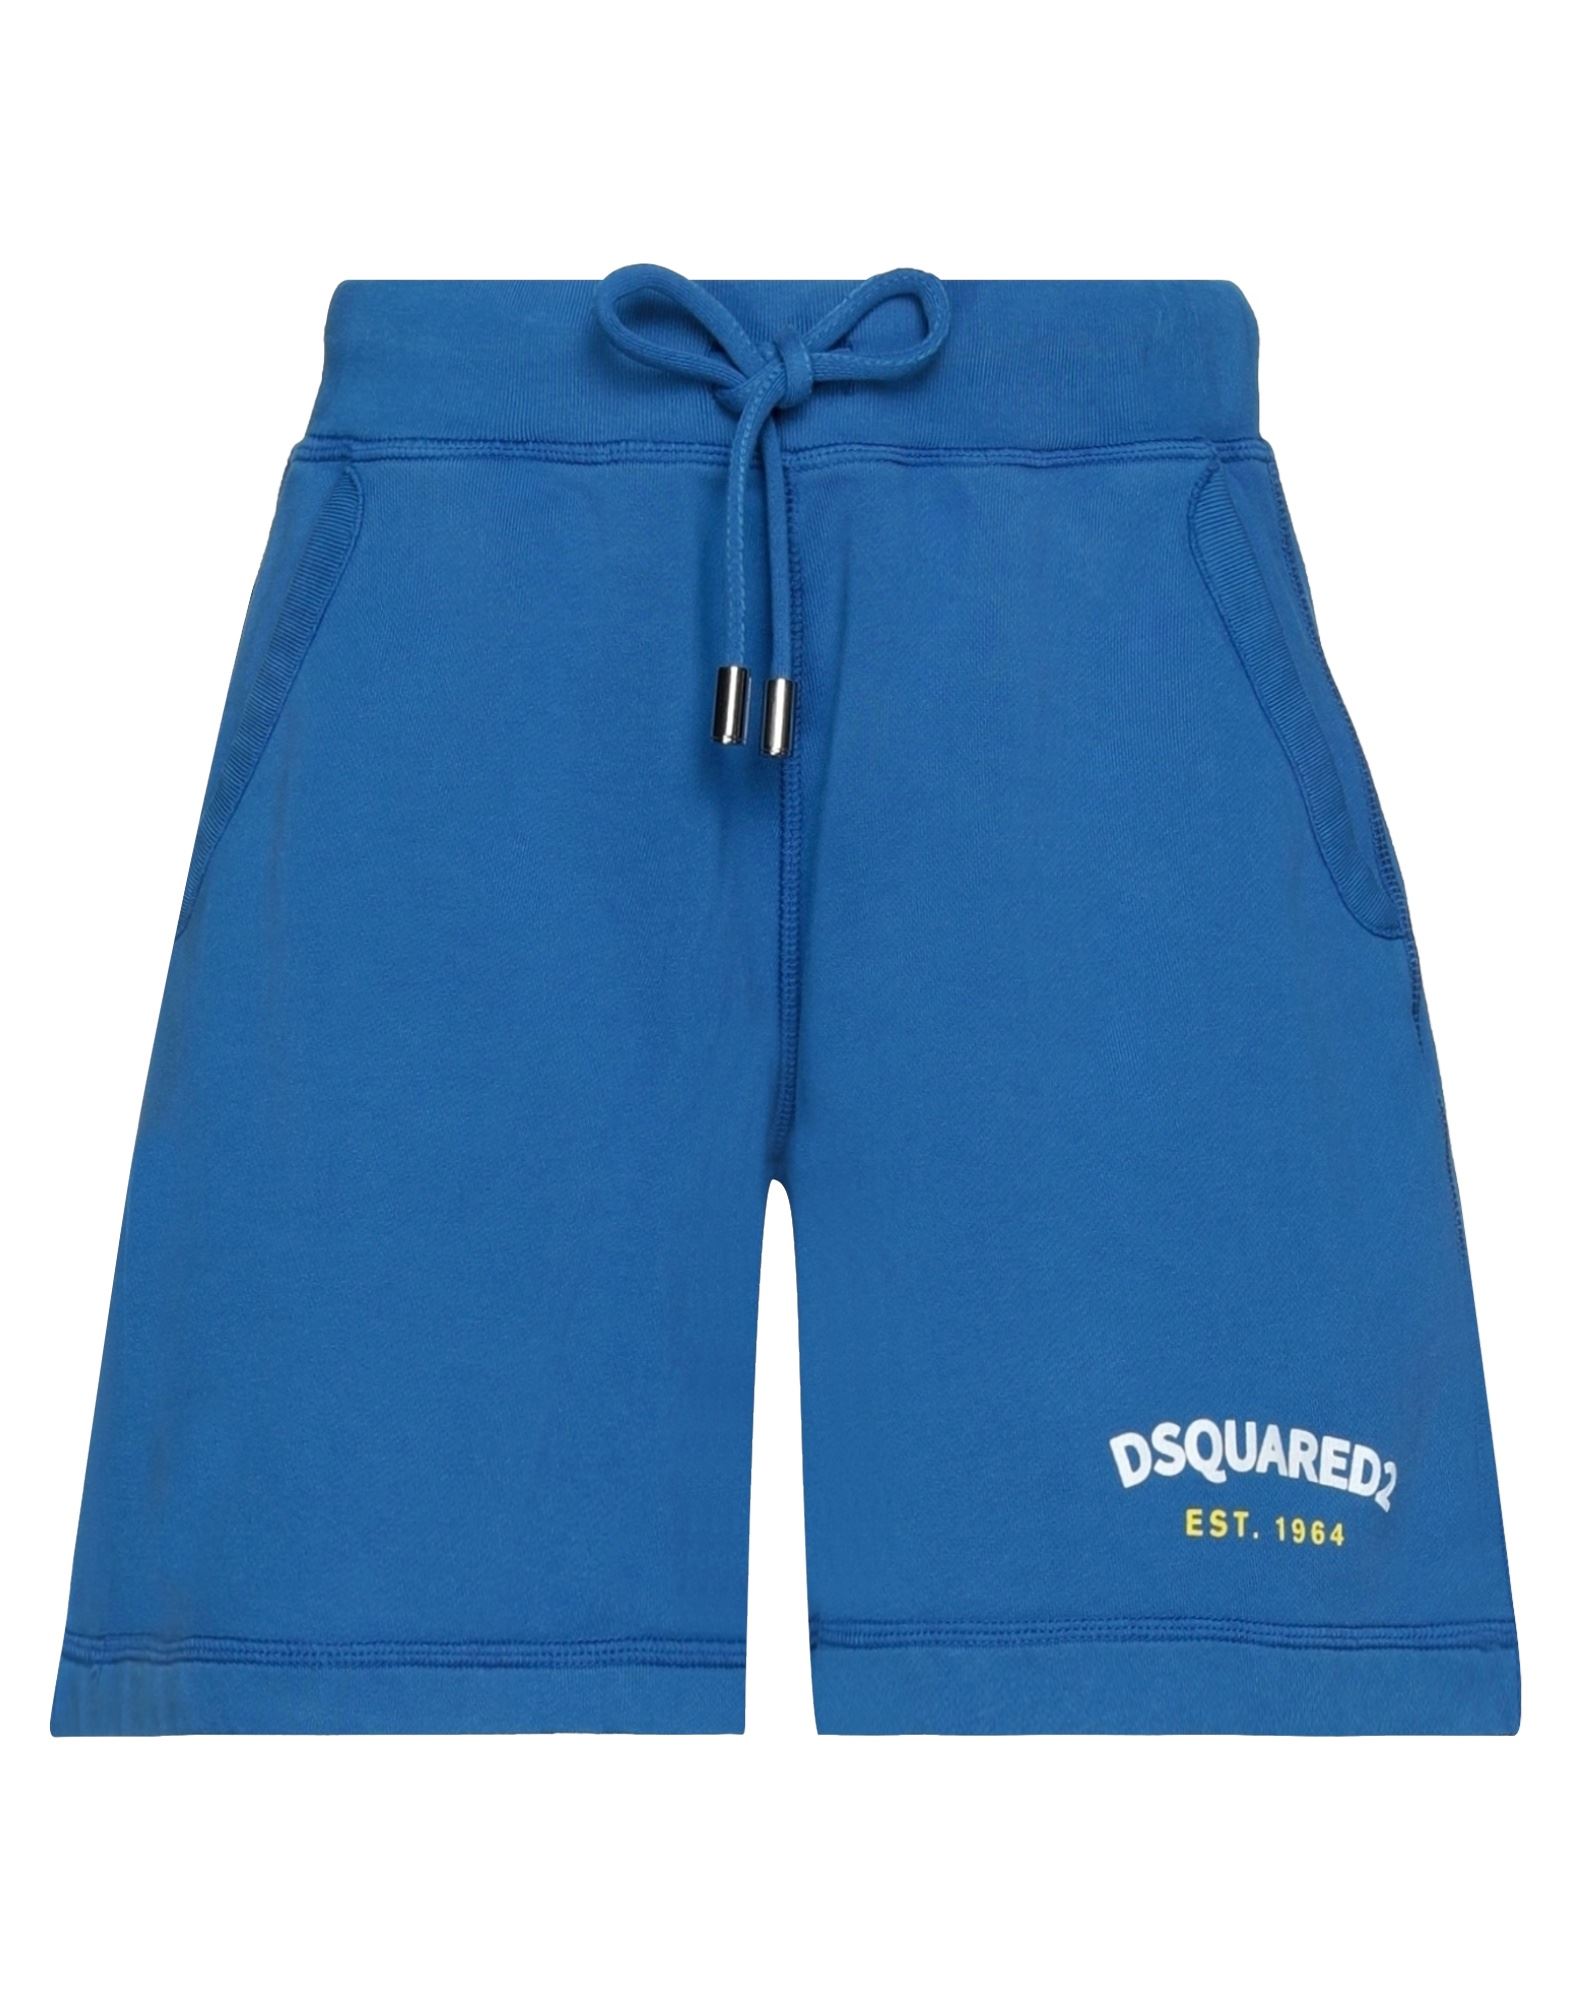 DSQUARED2 Shorts & Bermudashorts Damen Blau von DSQUARED2